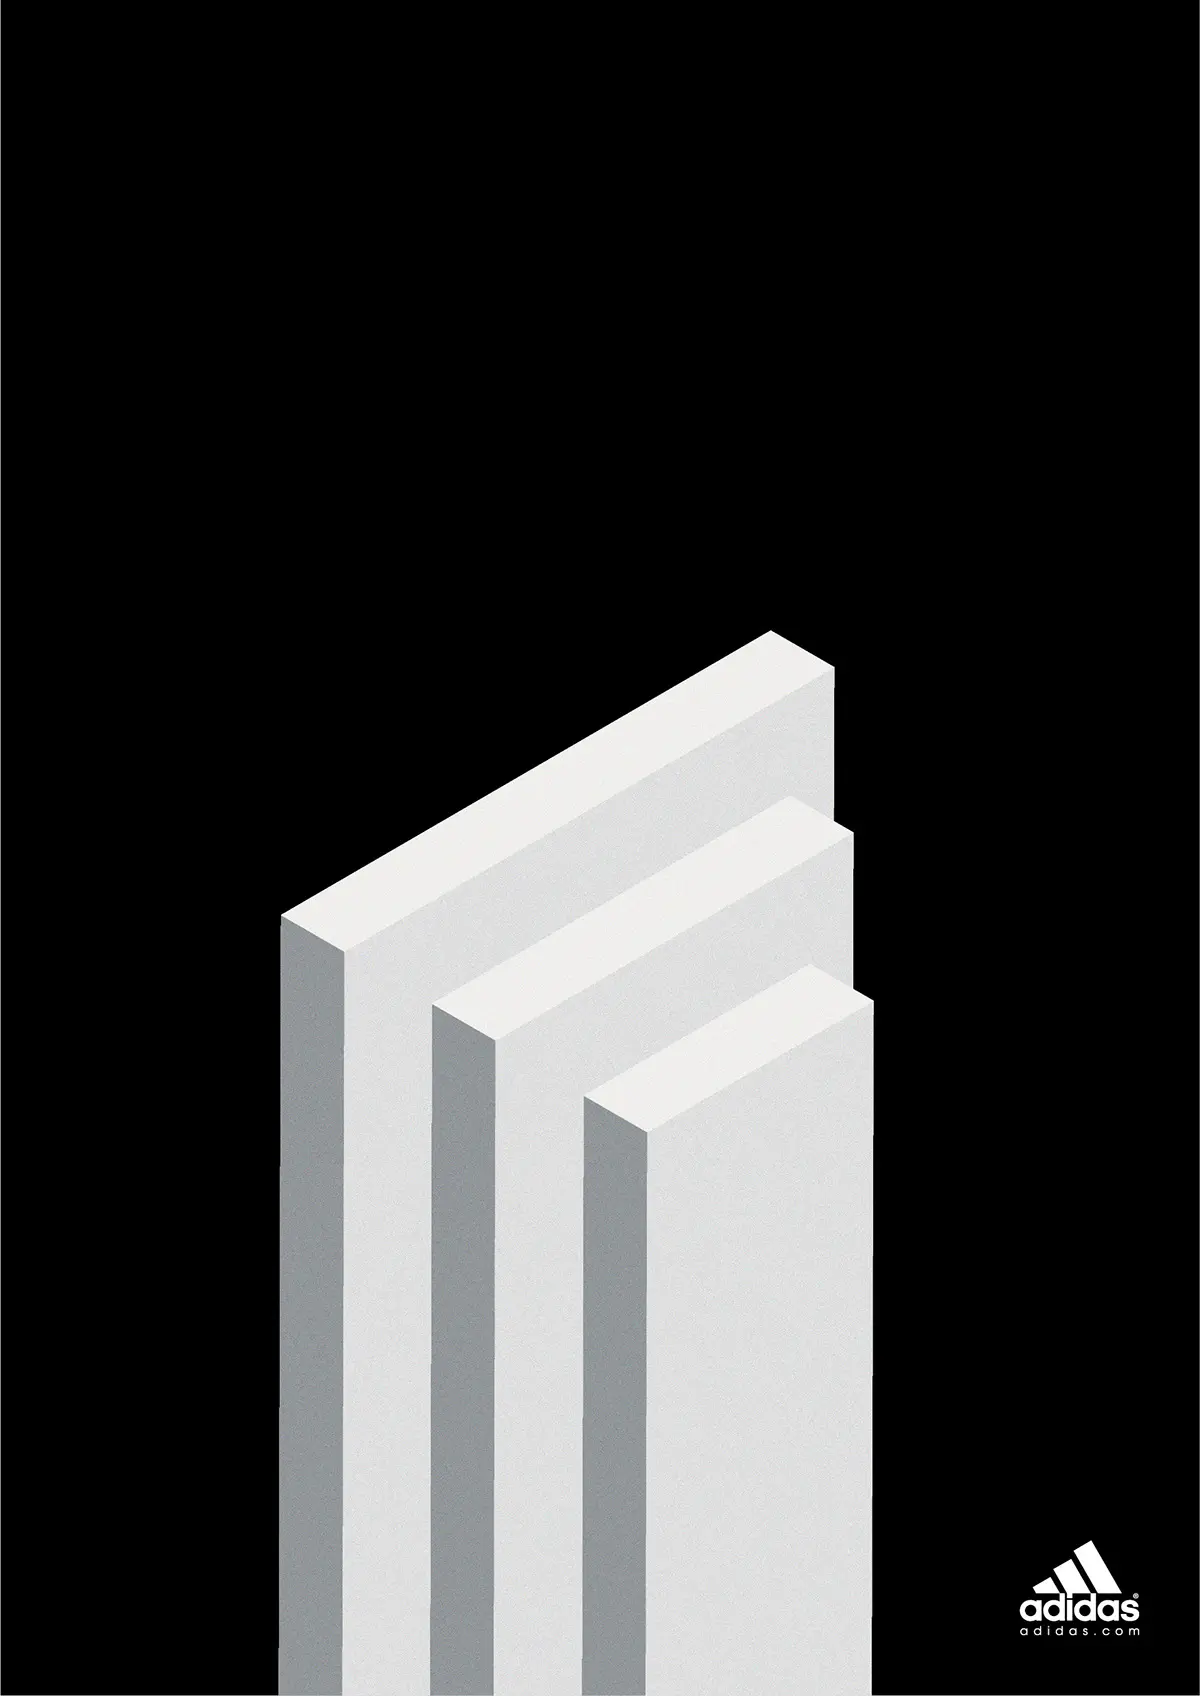 Adidas Isometric Poster 01